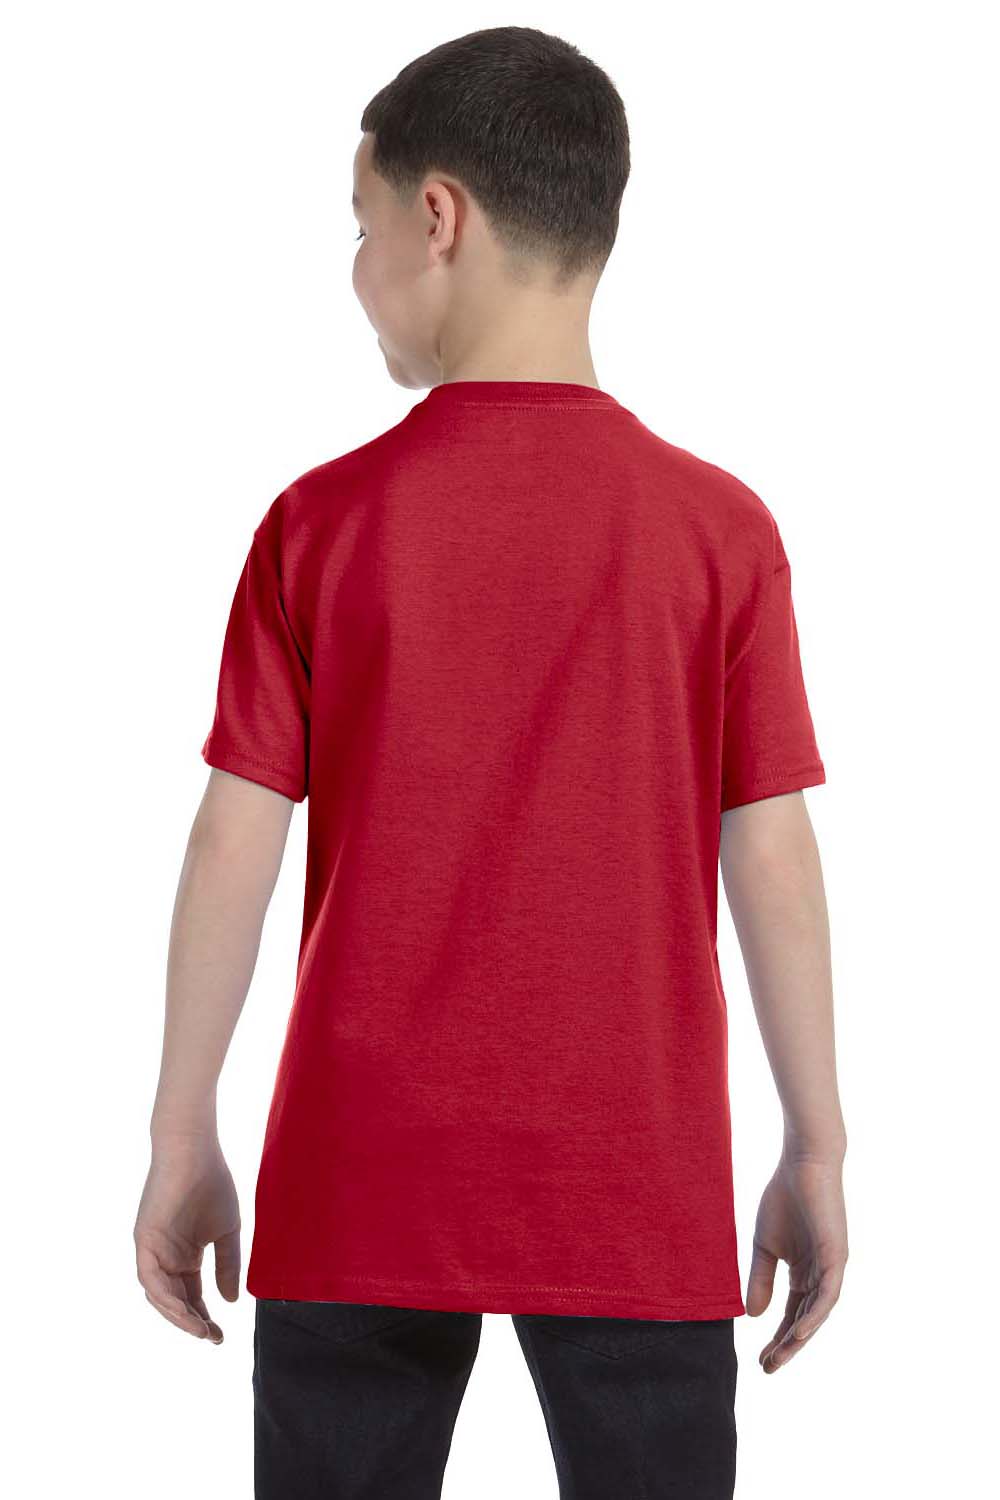 Jerzees 29B Youth Dri-Power Moisture Wicking Short Sleeve Crewneck T-Shirt Red Back